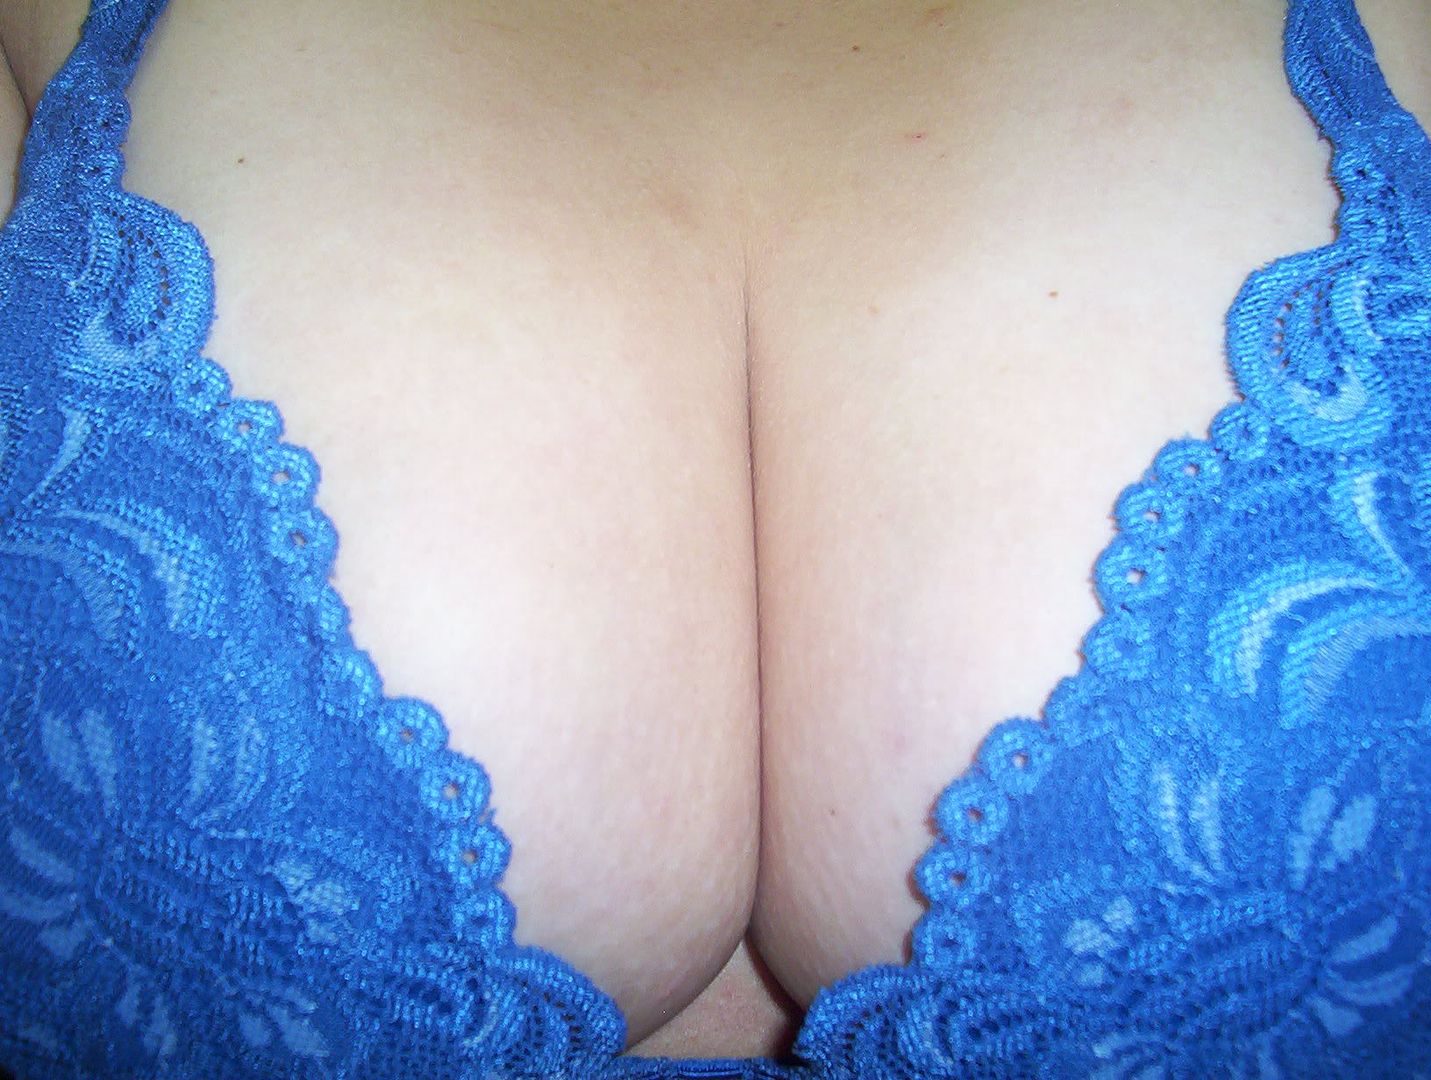 100_4089.jpg big tits image by besttits